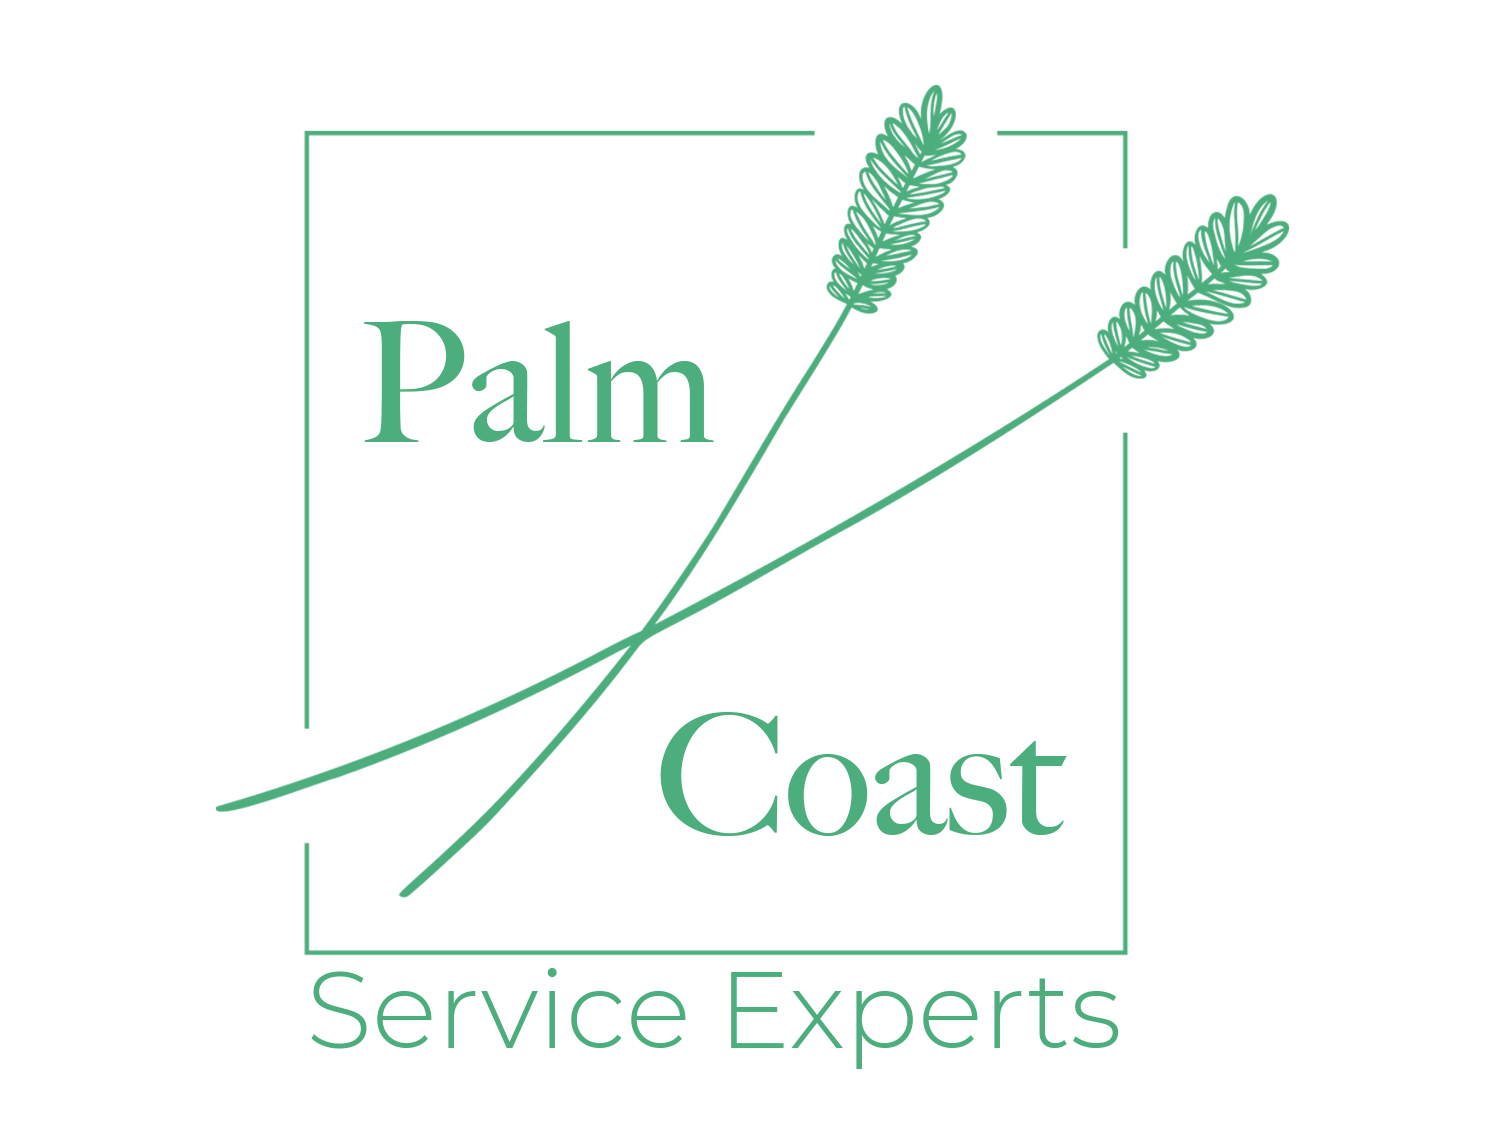 Palm Coast Service Experts